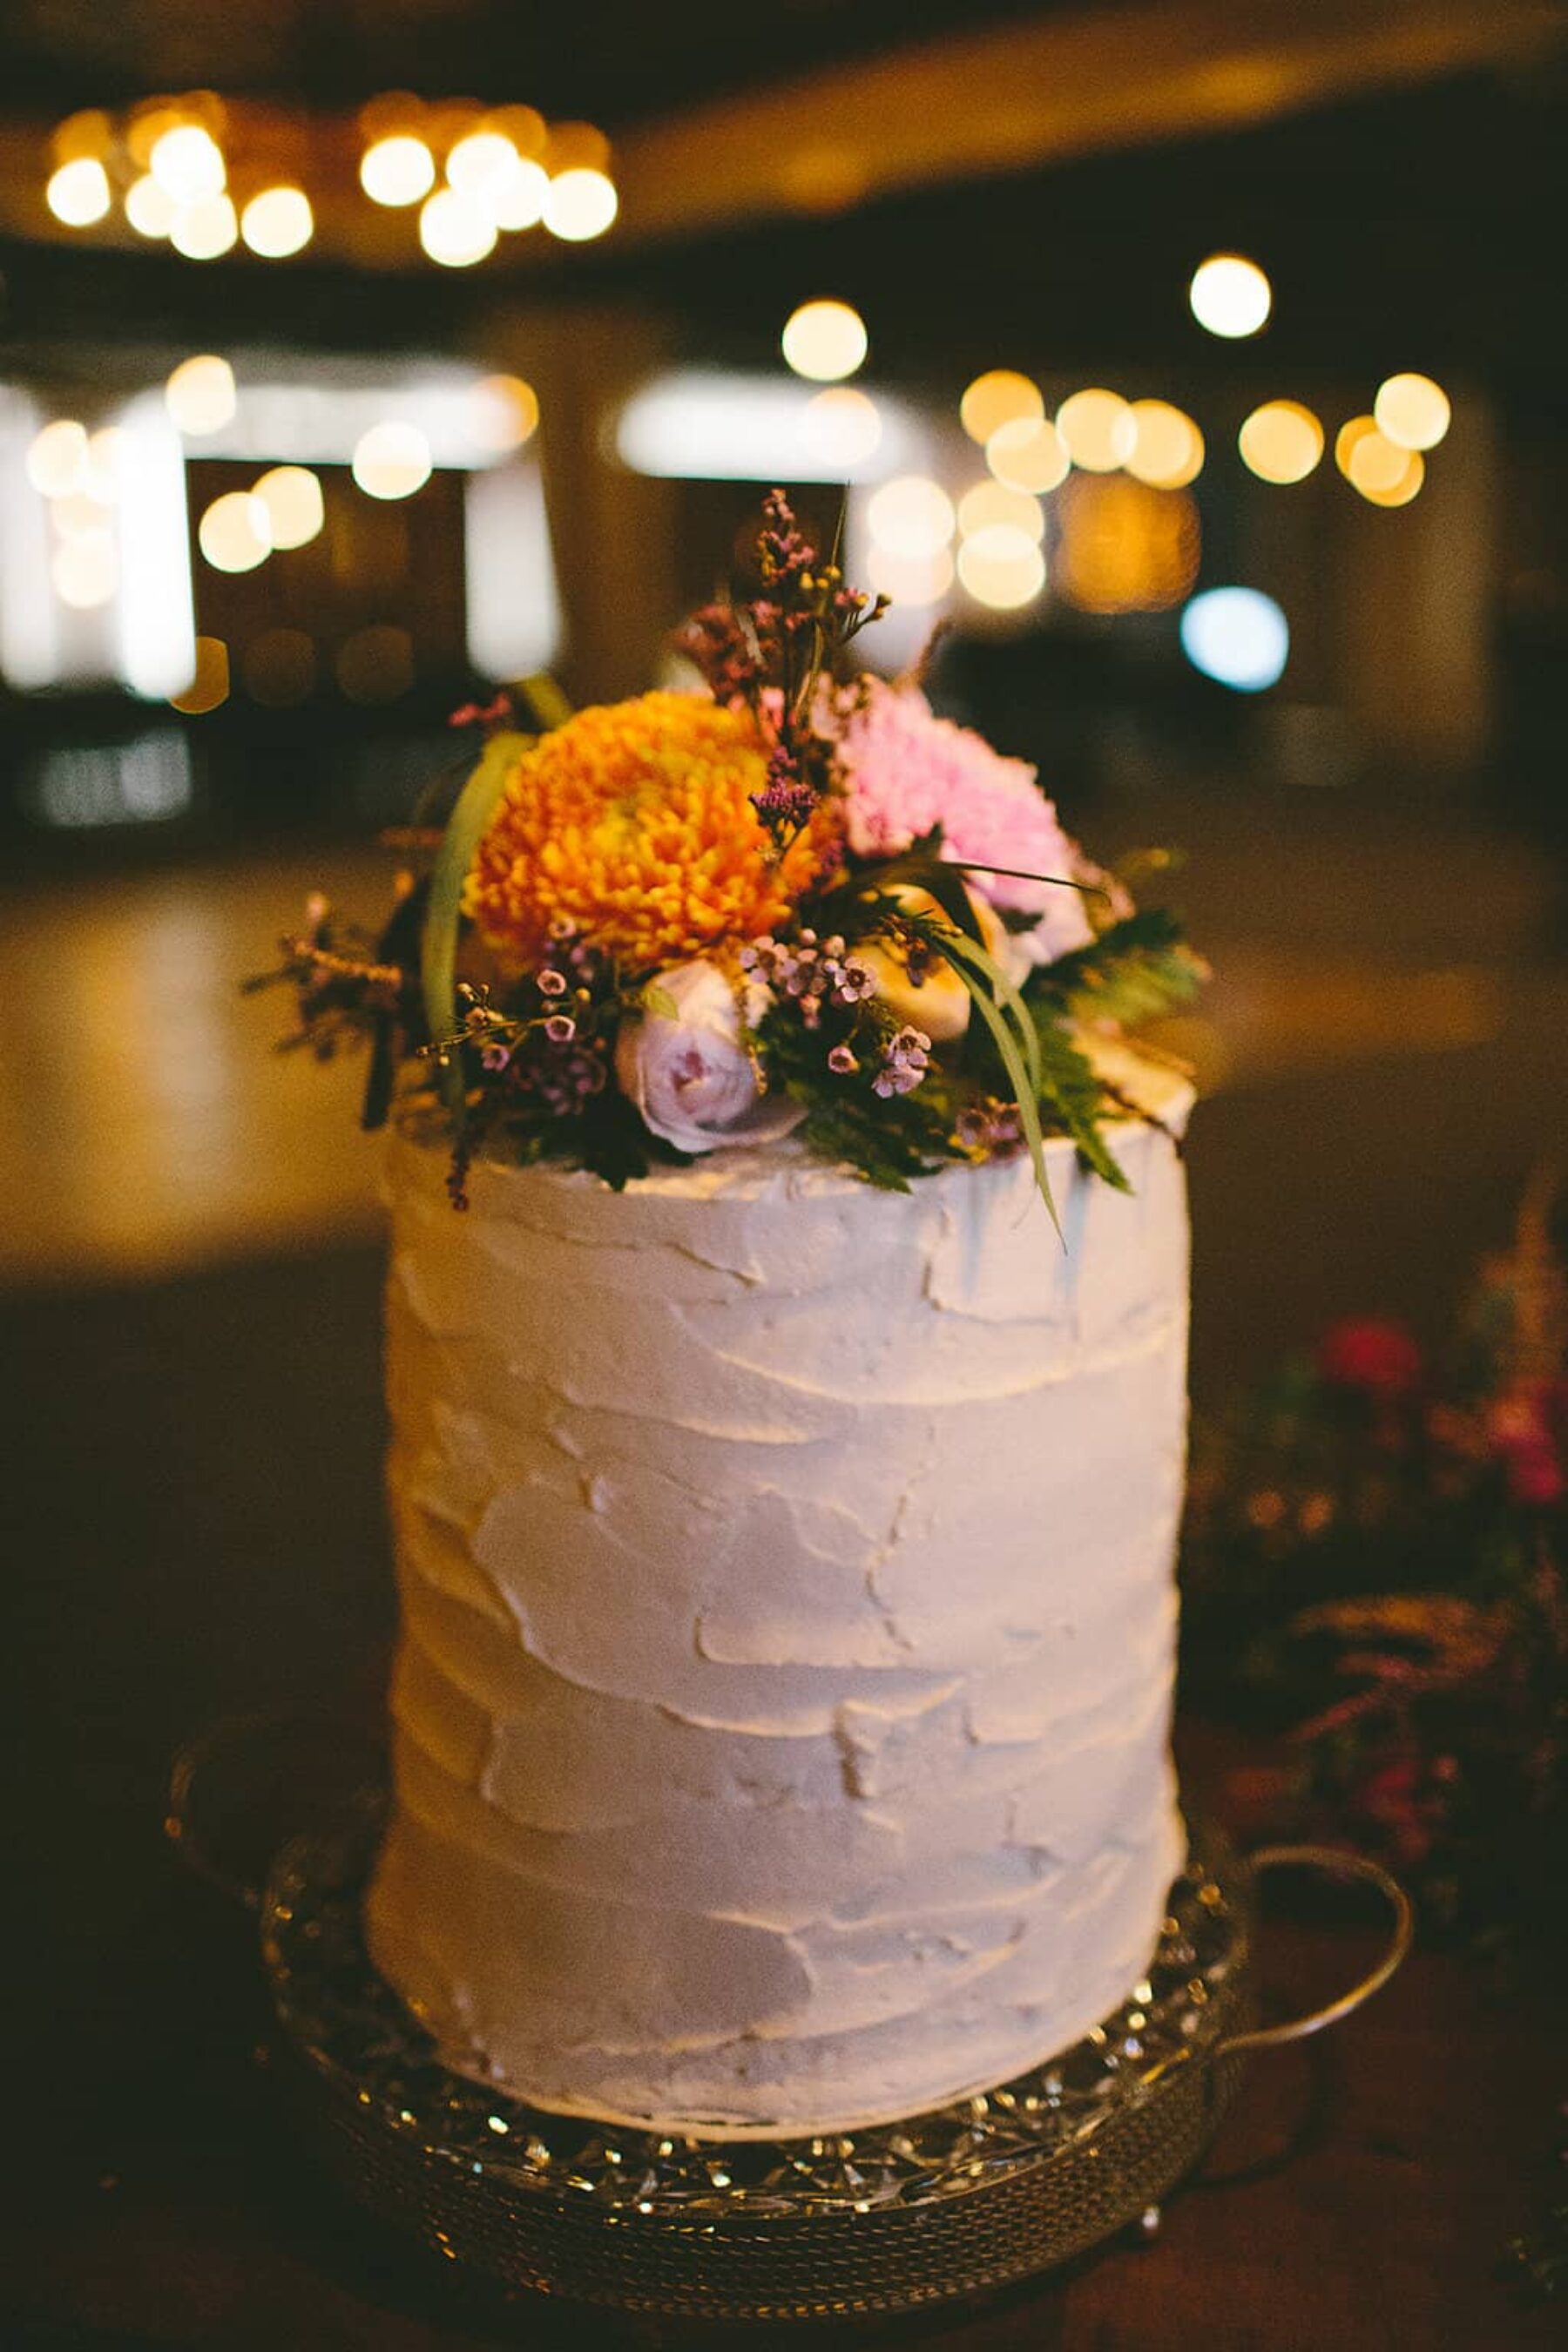 single tier wedding cake with fresh flowers